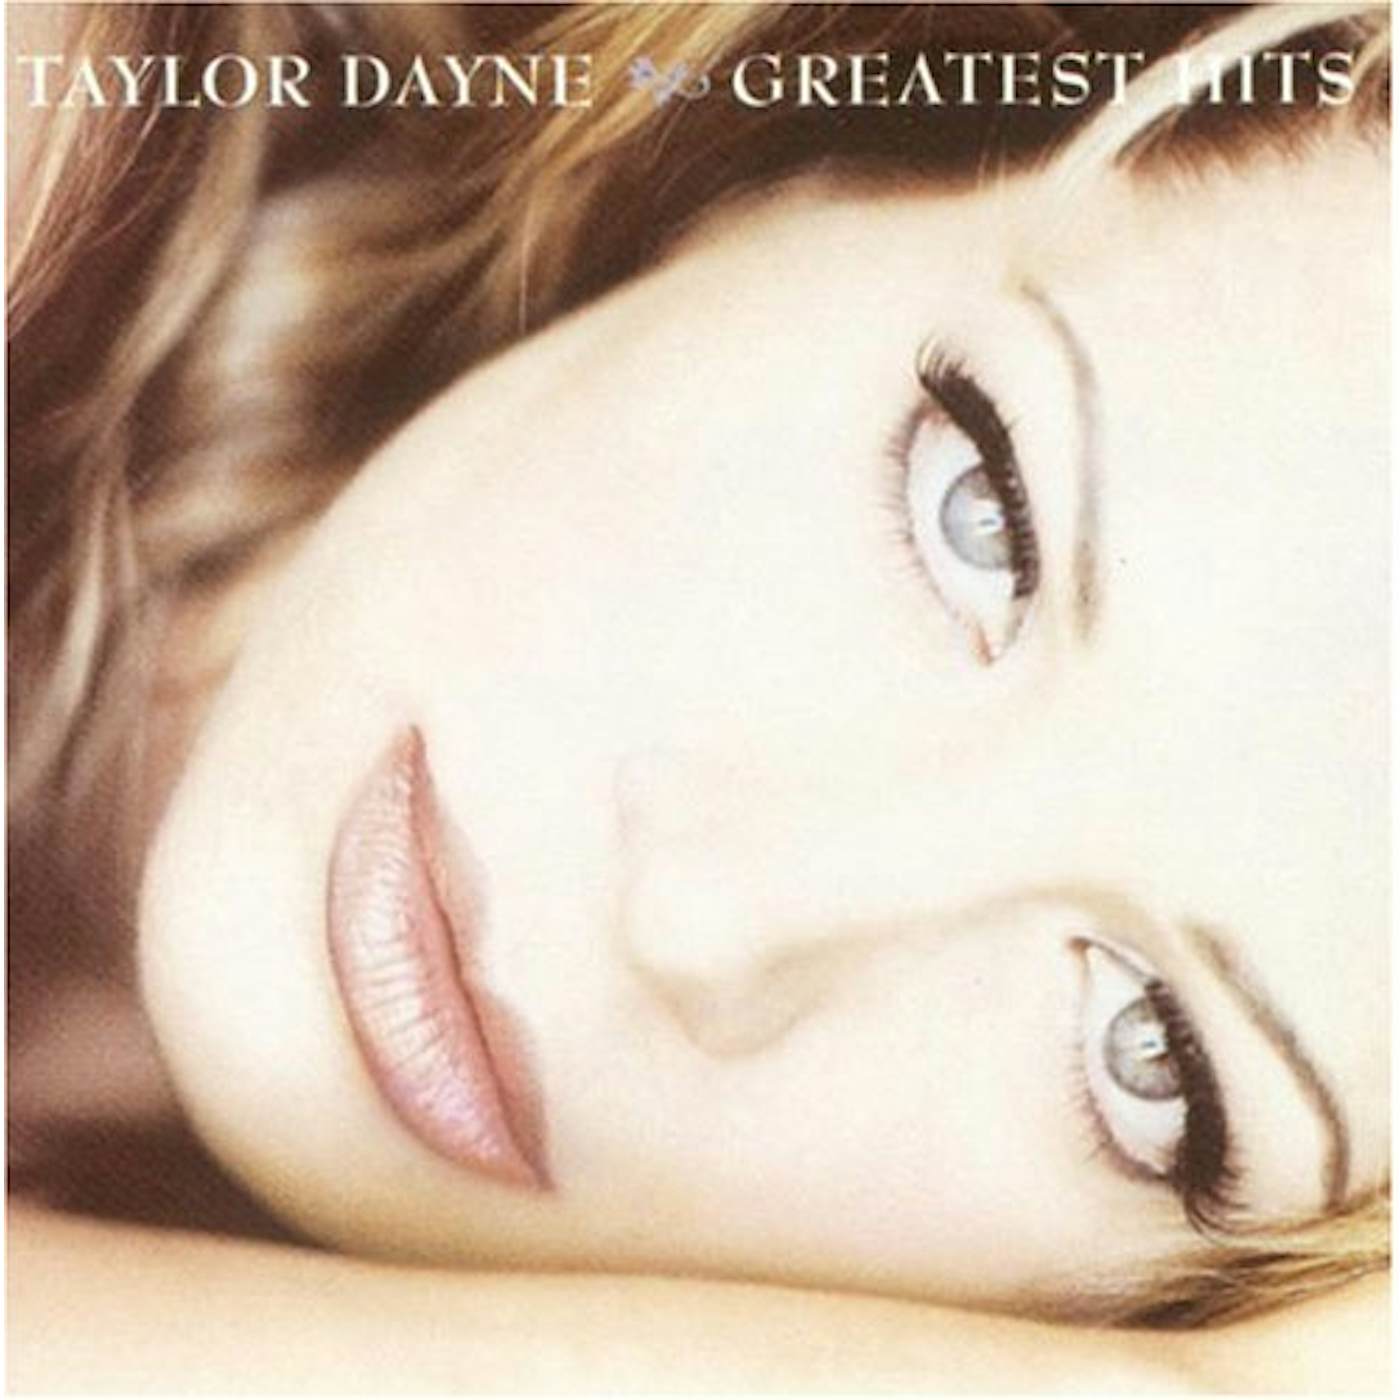 Taylor Dayne GREATEST HITS CD